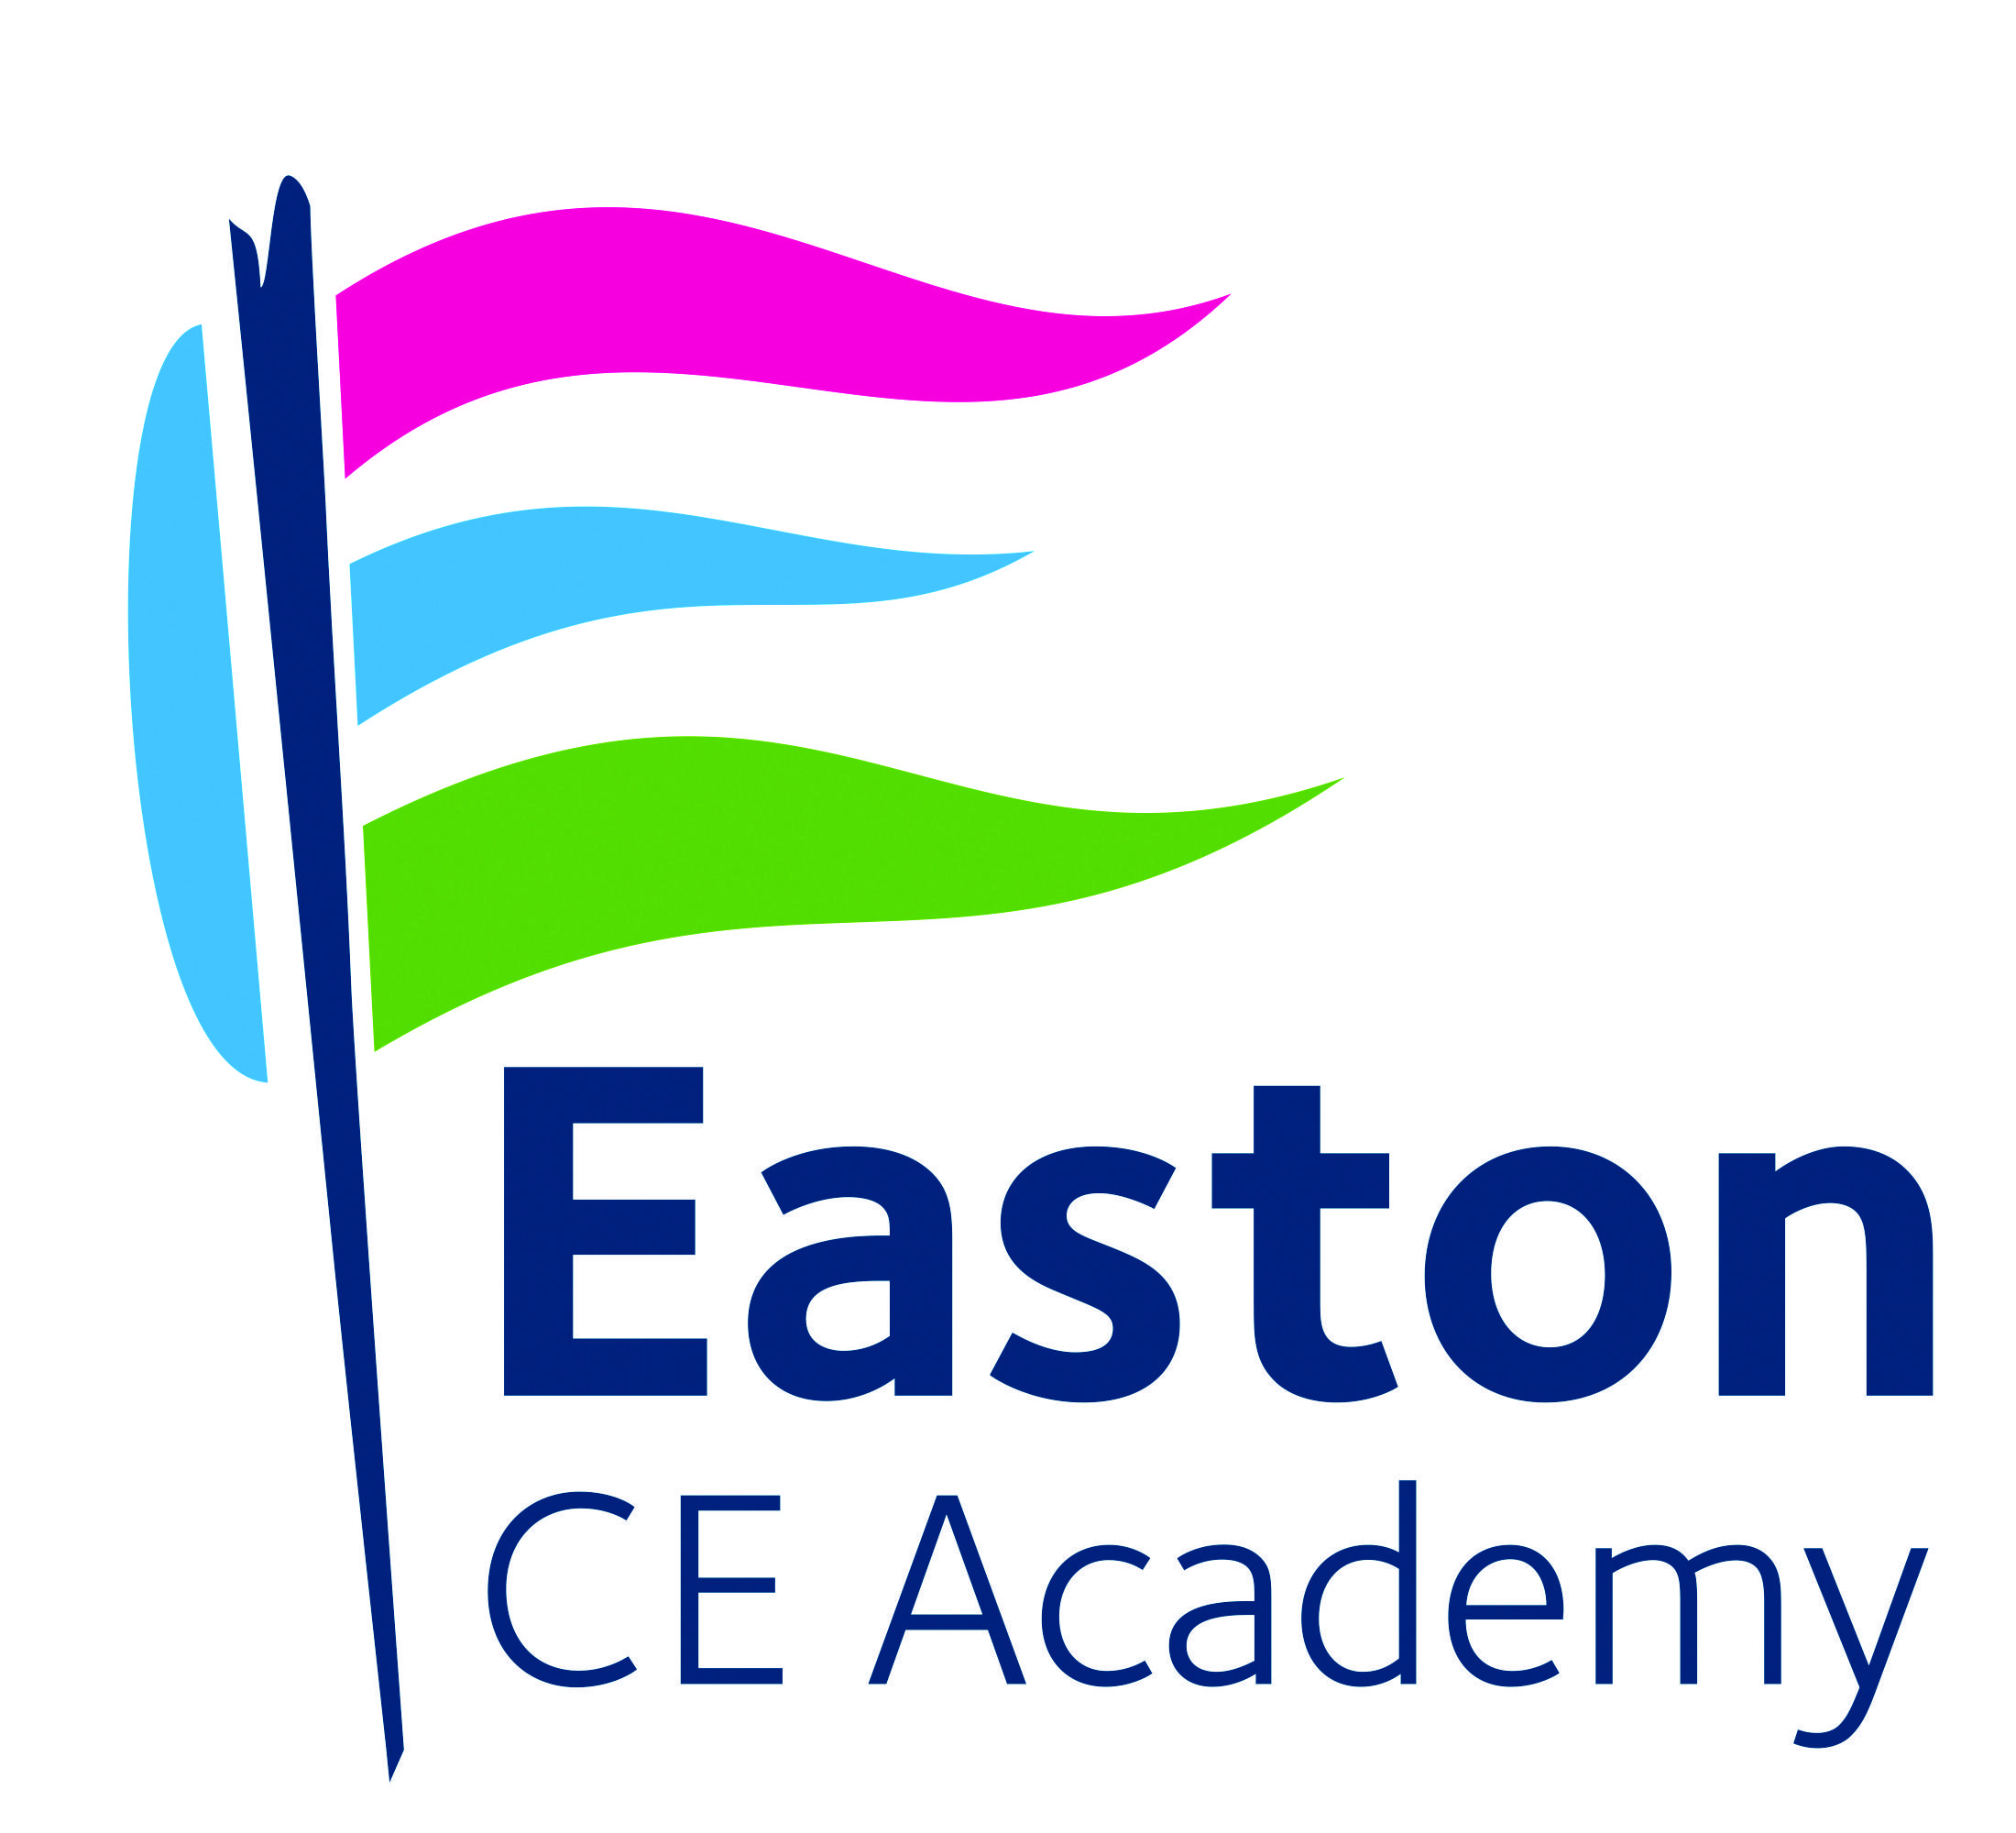 New Easton Logo - Easton CE Academy - Primary education in Easton - Home